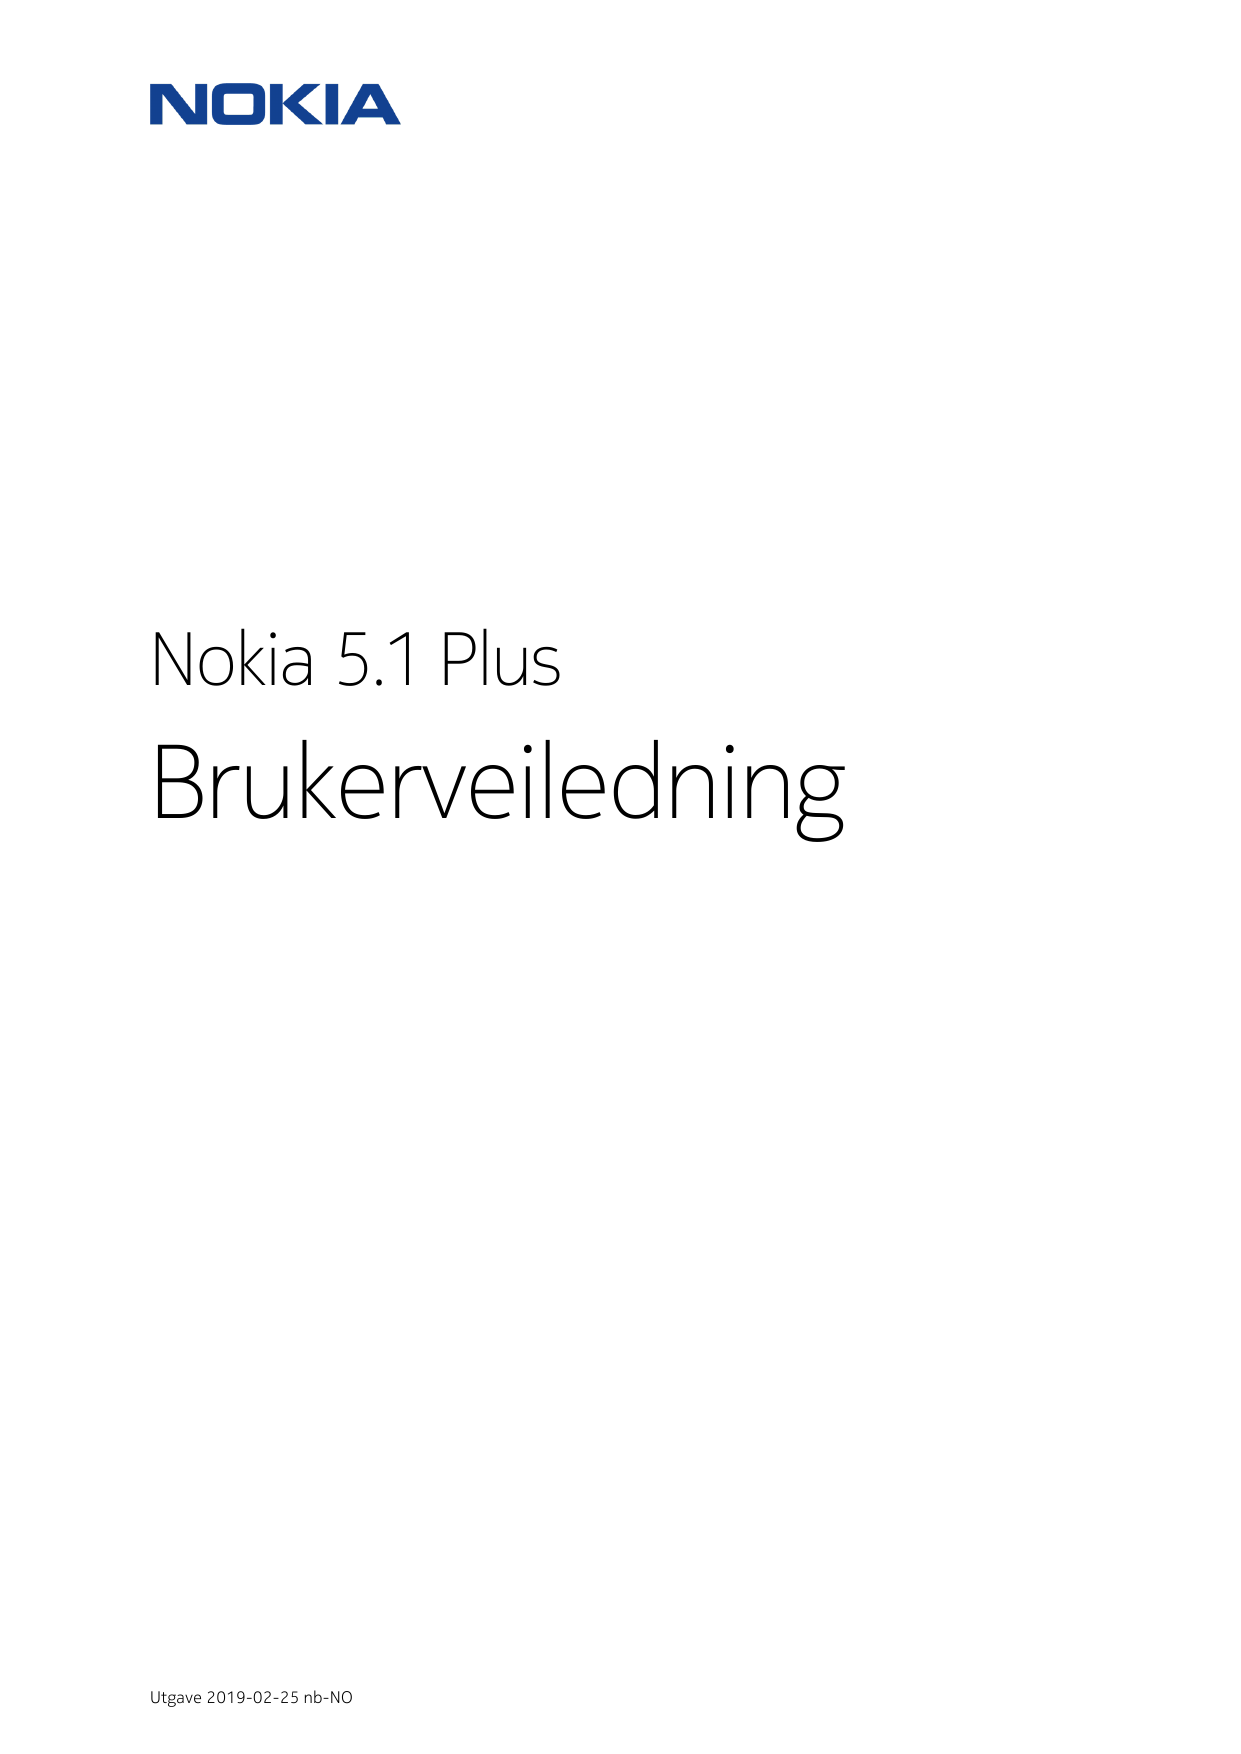 Nokia 5.1 PlusBrukerveiledningUtgave 2019-02-25 nb-NO